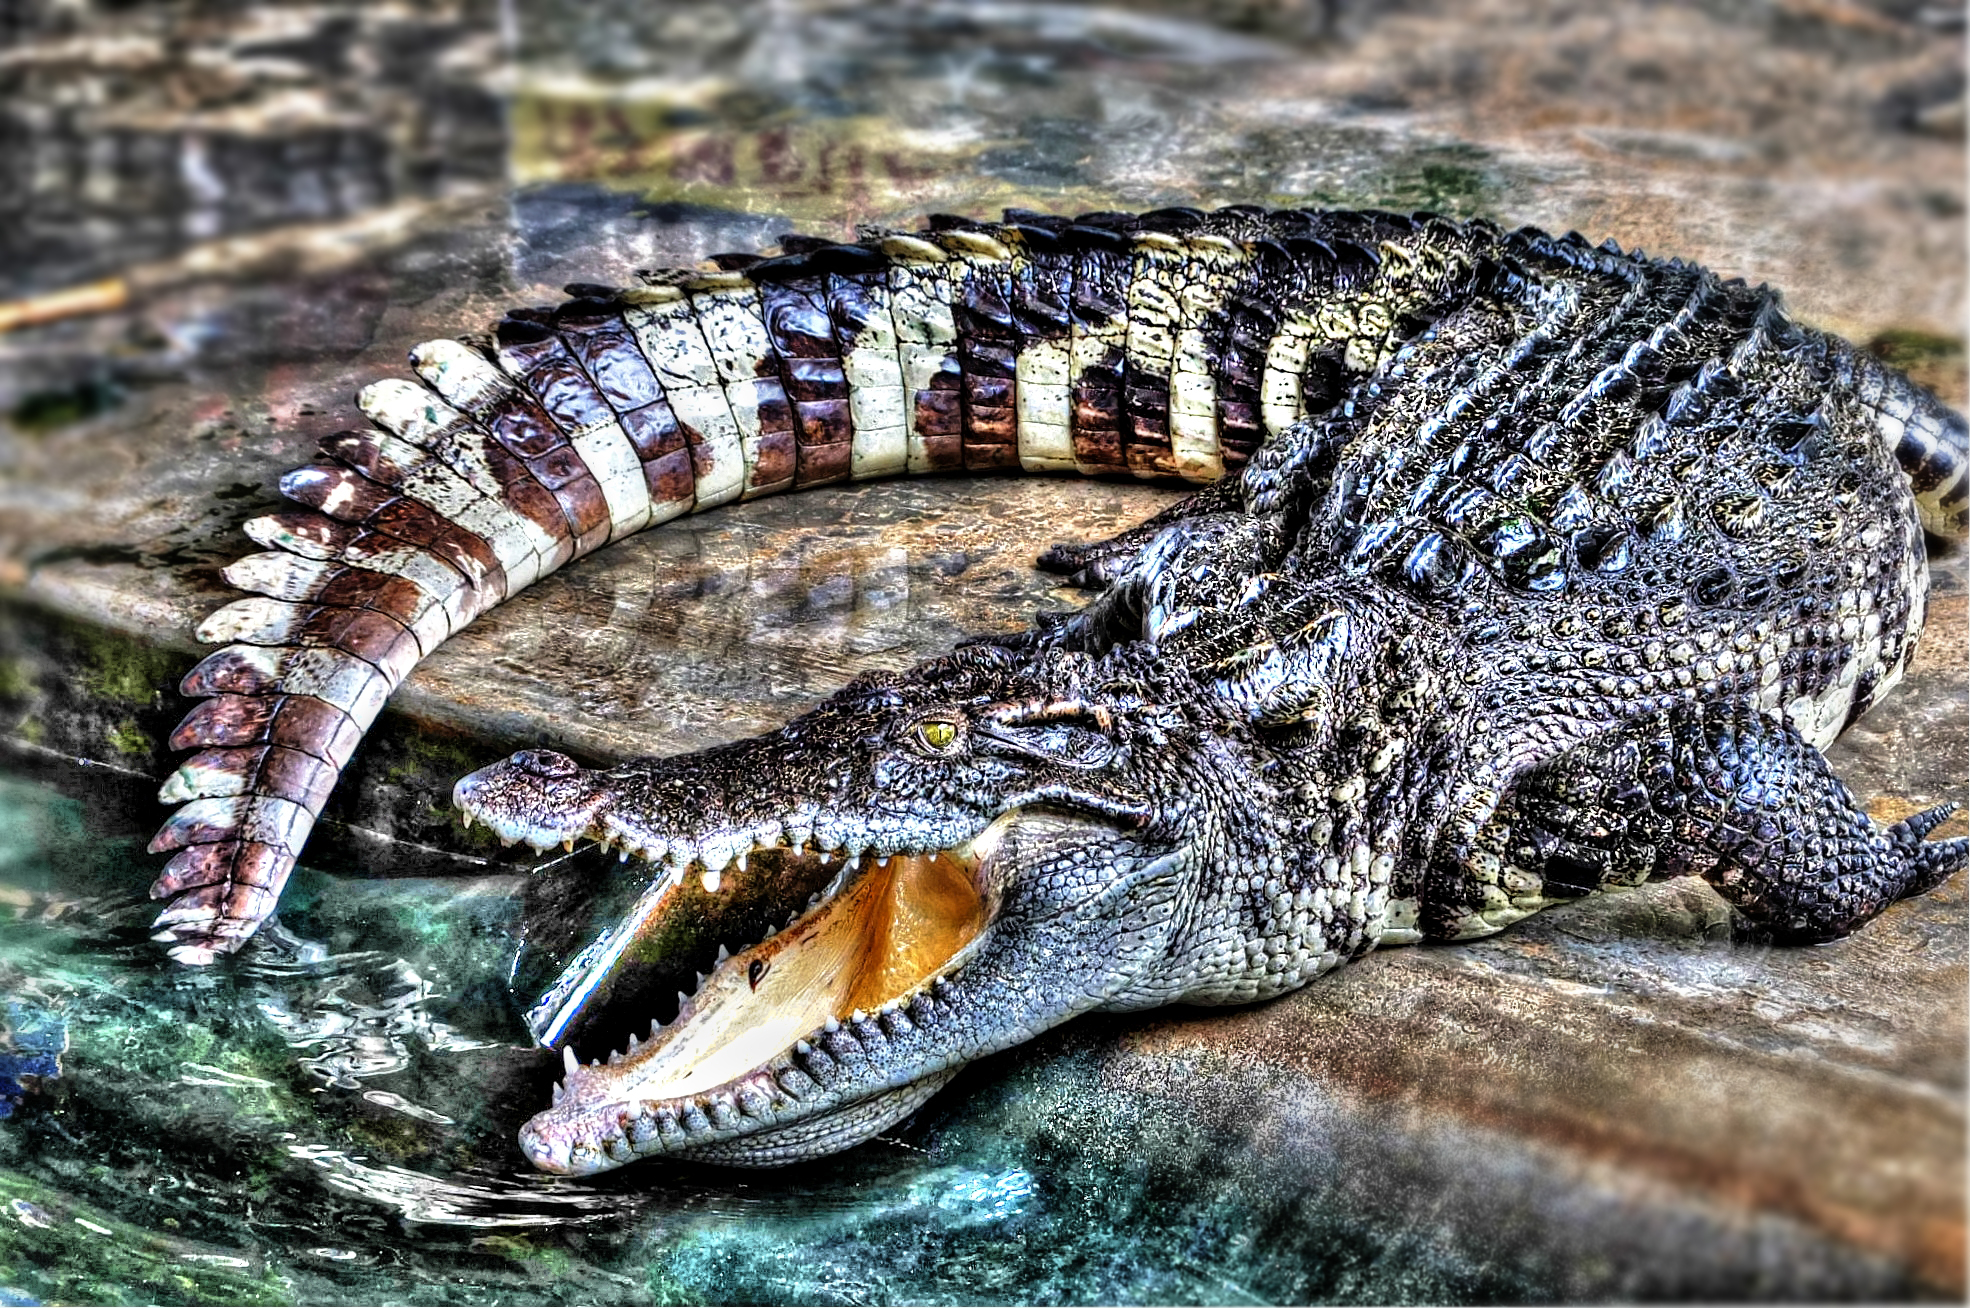 croc by danist soh of singapore